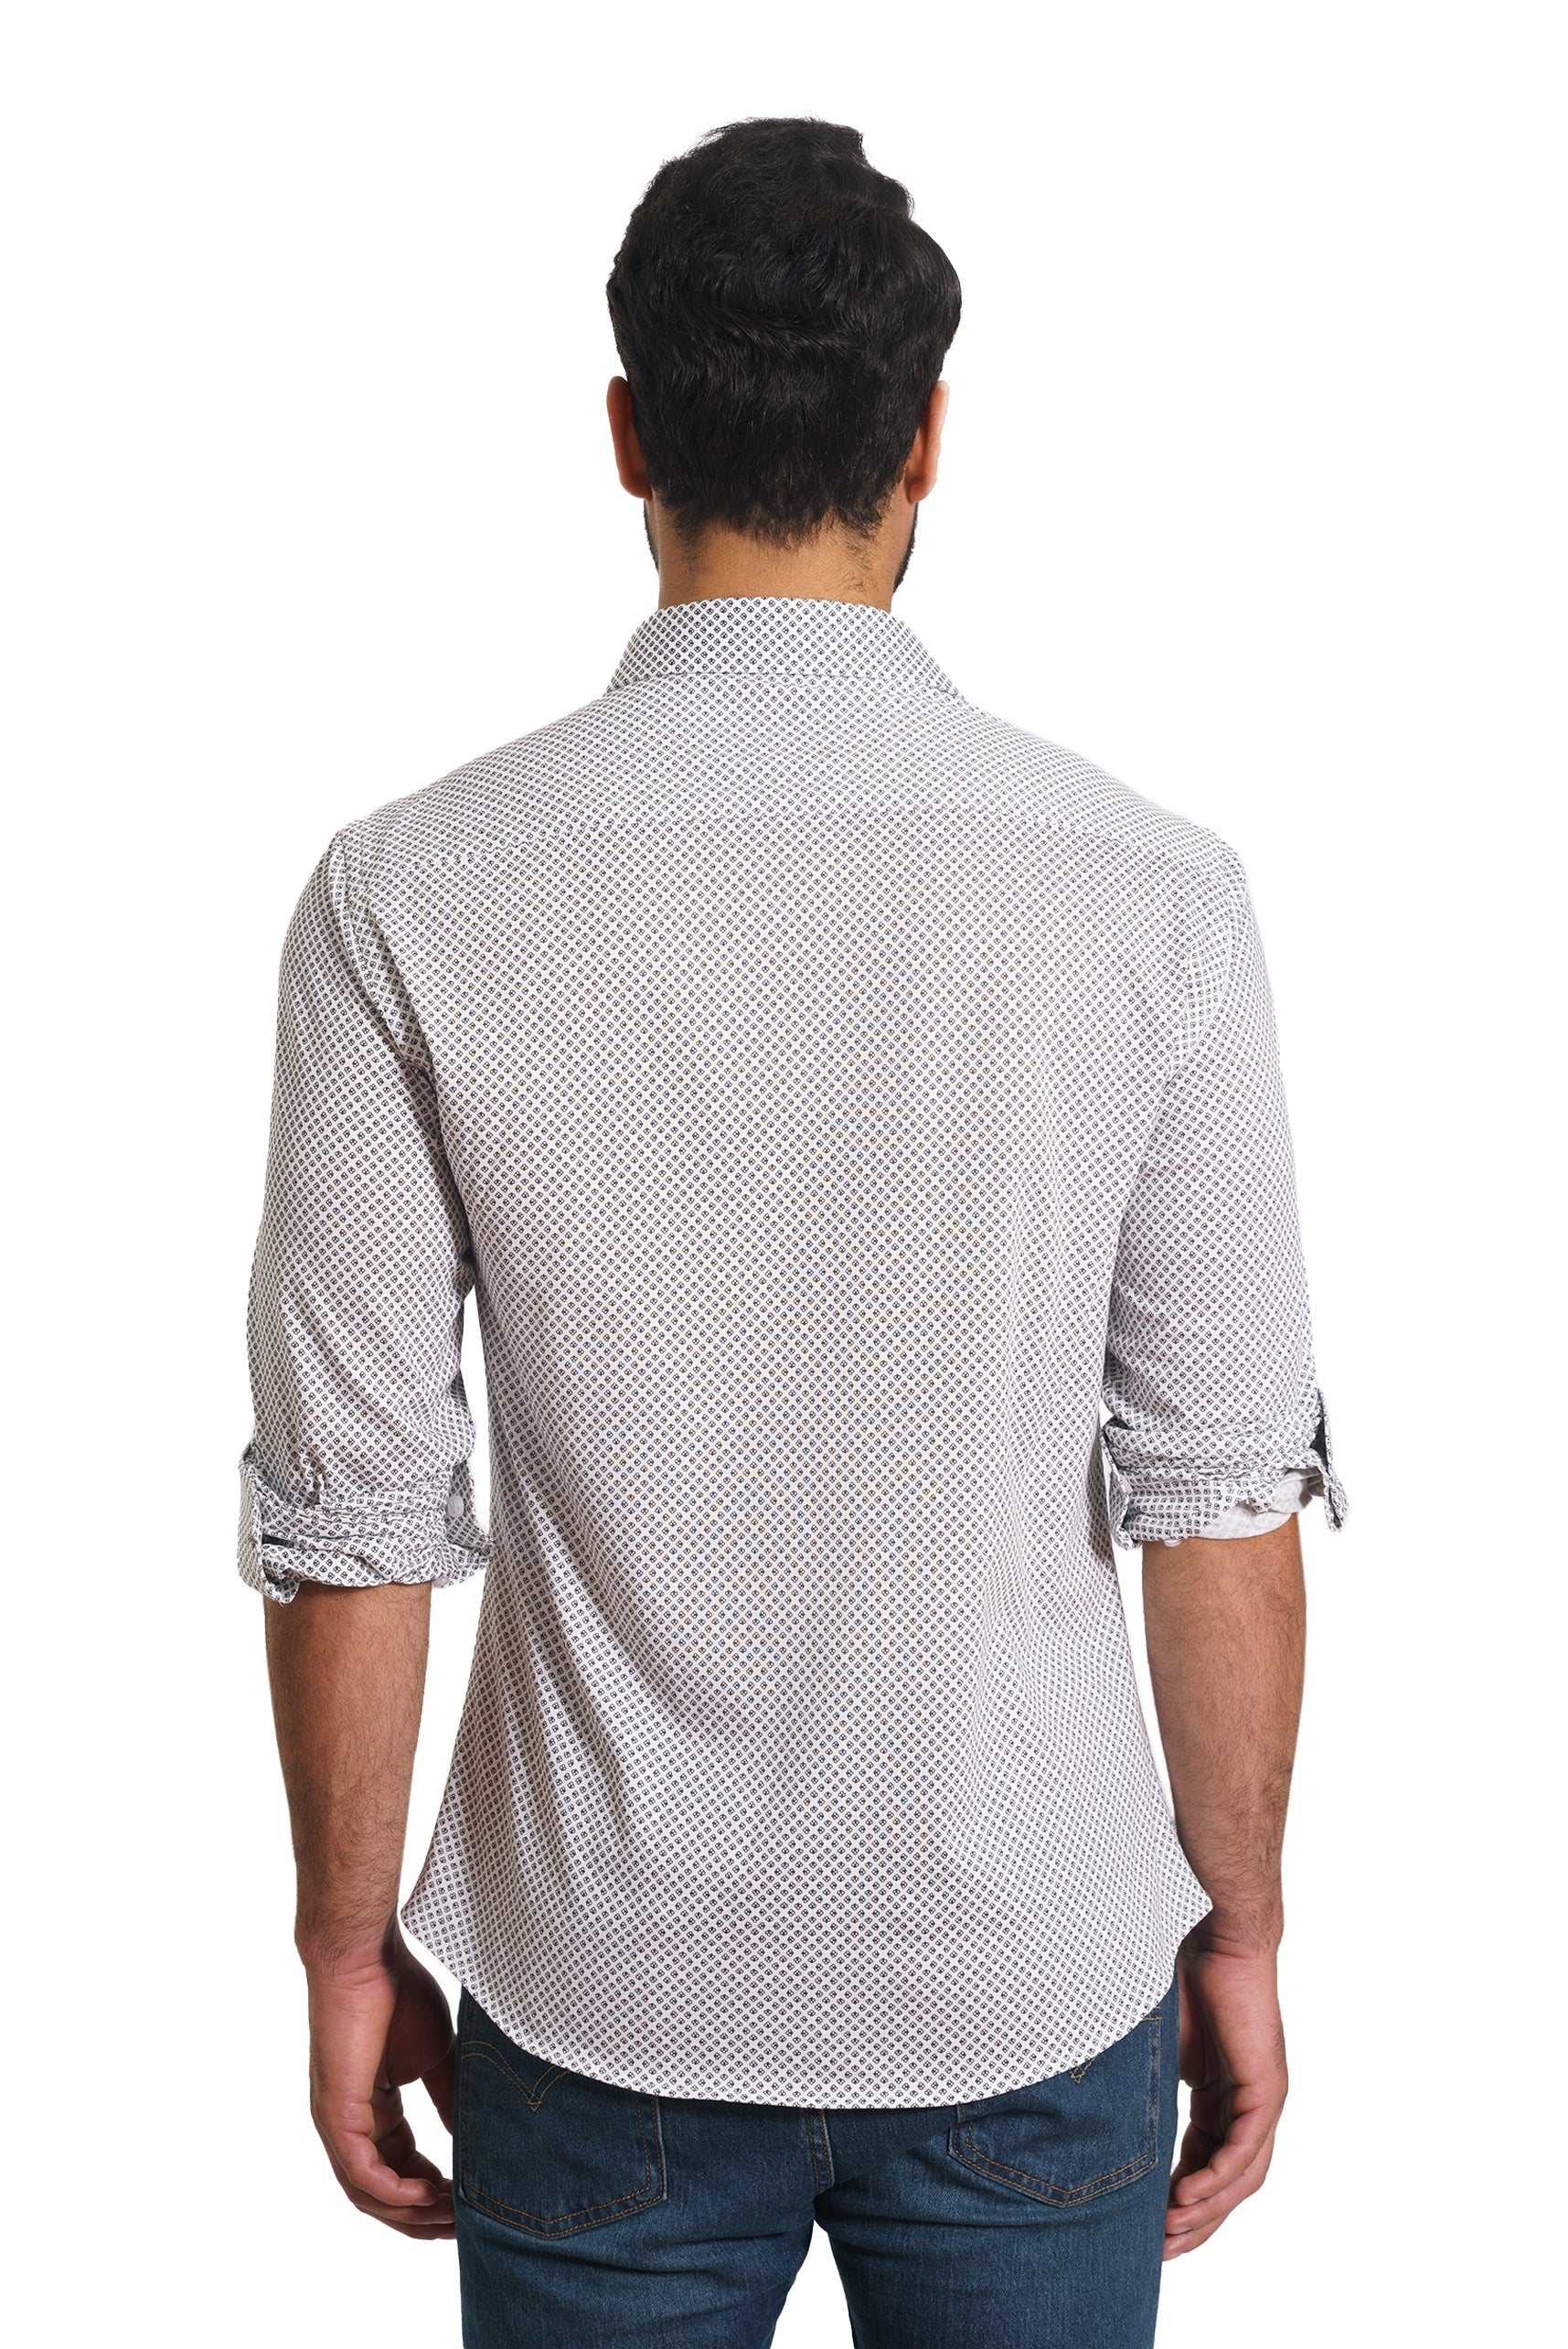 White Print Long Sleeve Shirt TH-2873 Back